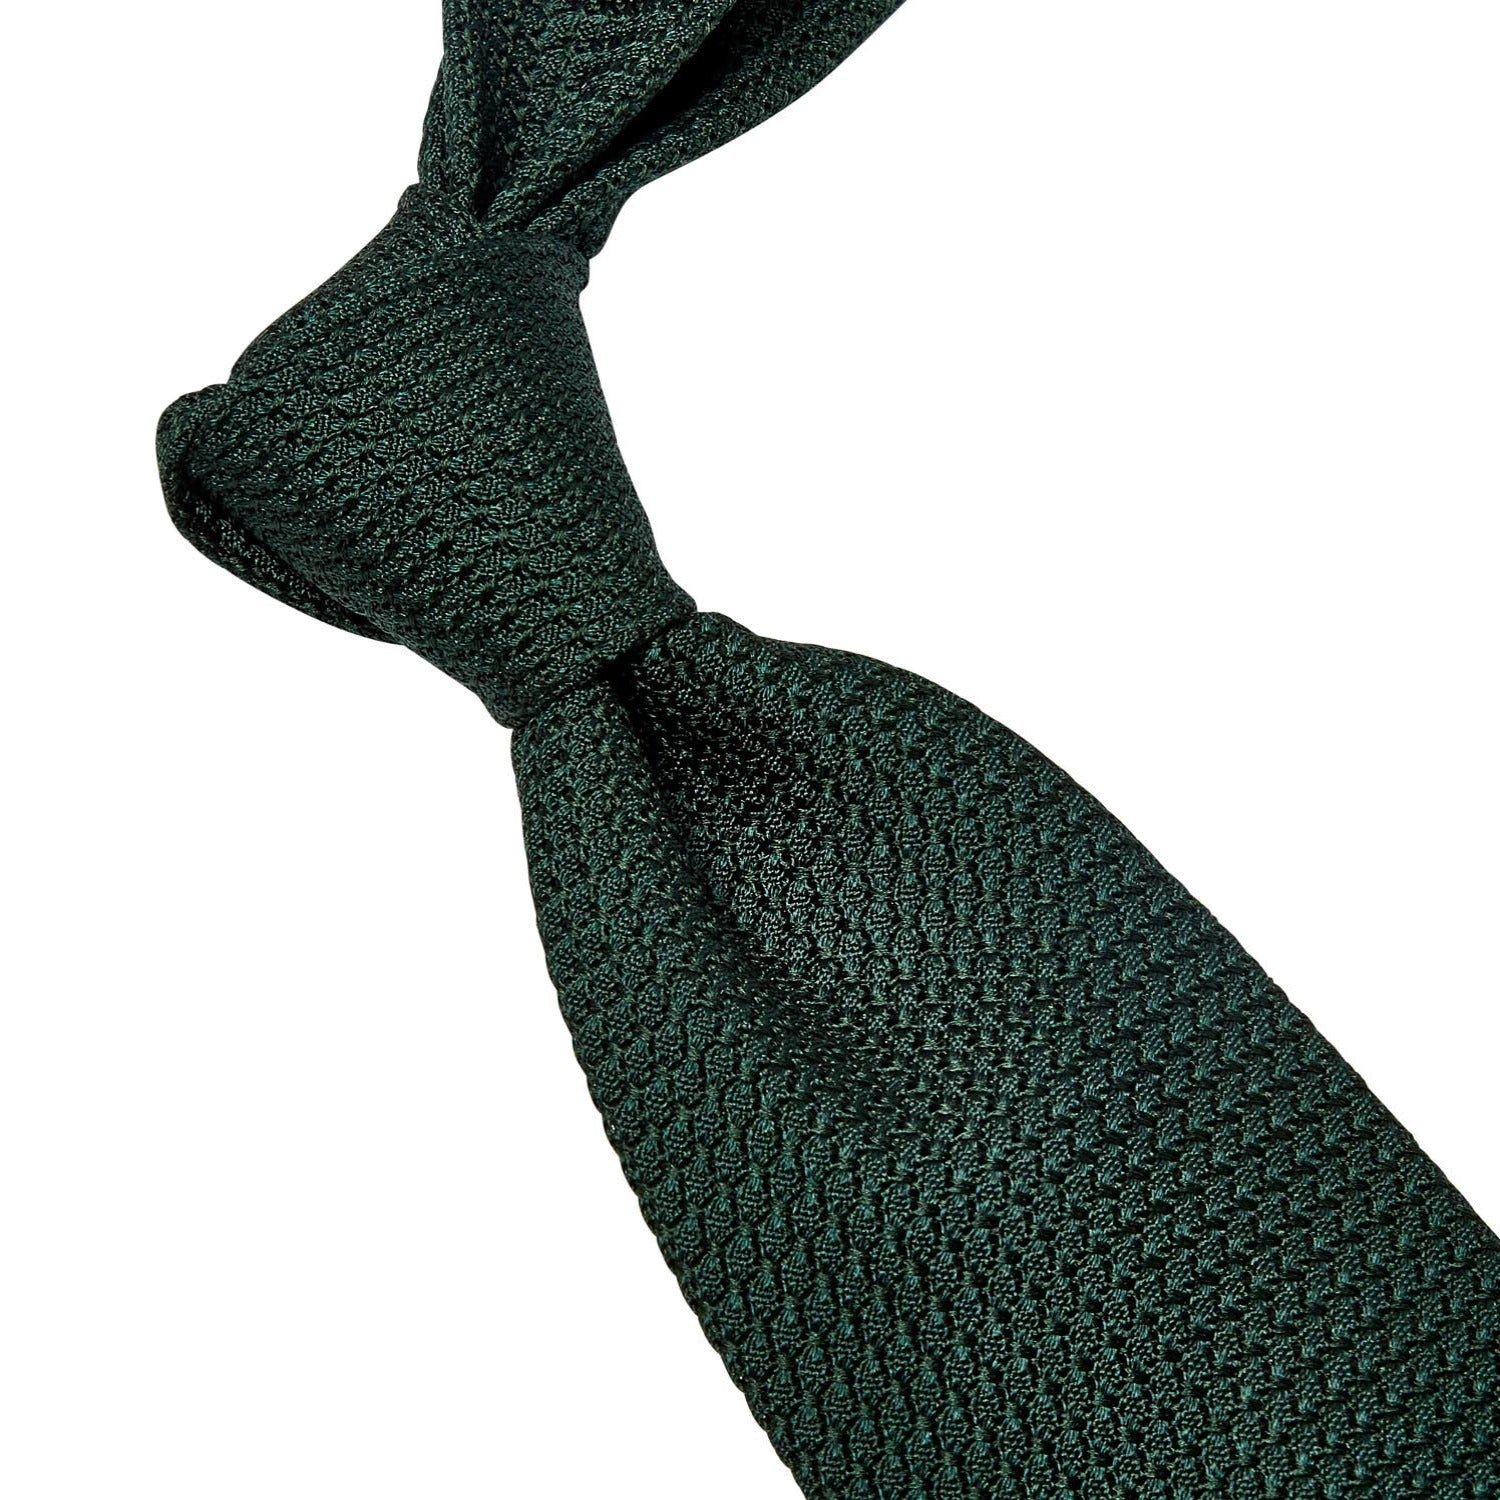 A Sovereign Grade Emerald Grenadine Grossa tie from KirbyAllison.com showcasing quality craftsmanship on a white background.